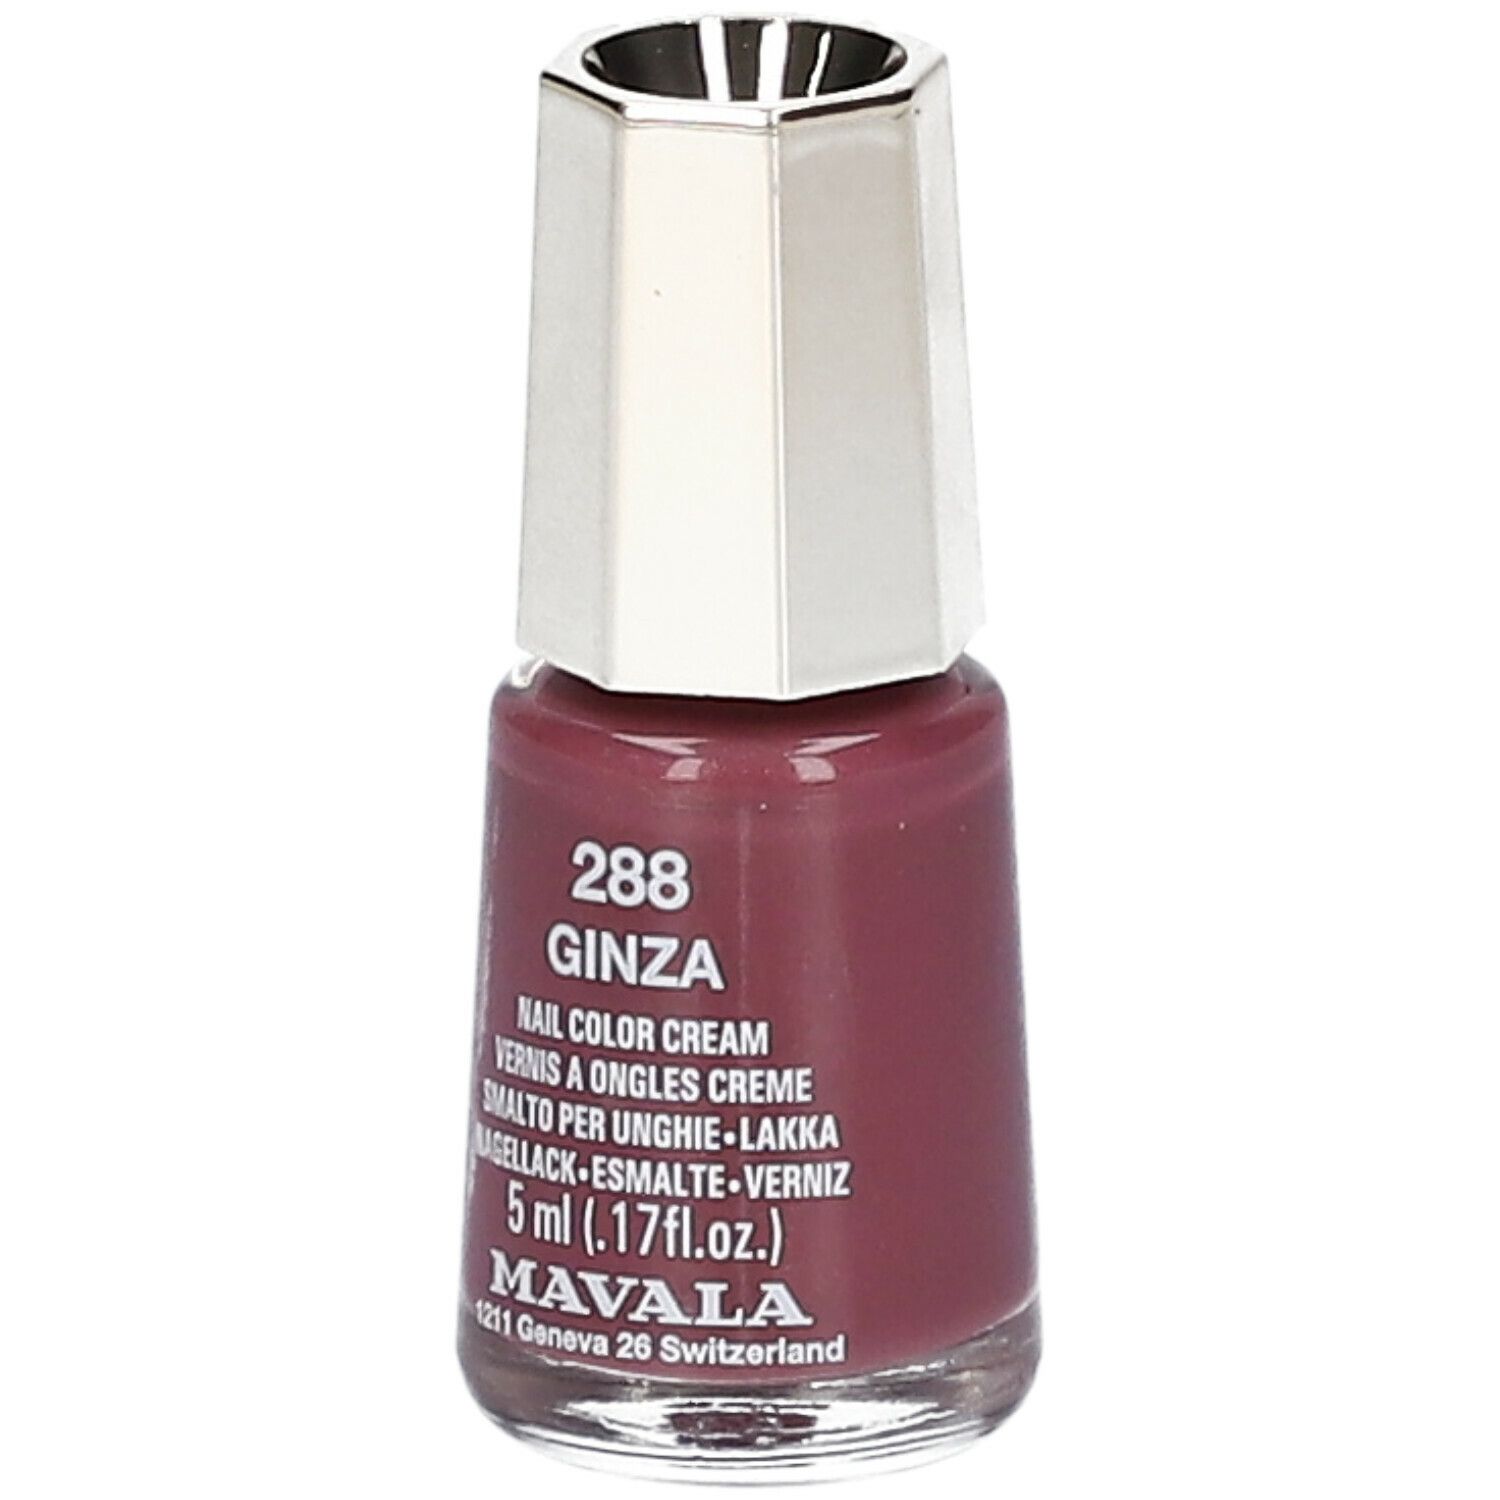 Mavala Mini Color vernis à ongles crème - Ginza 288